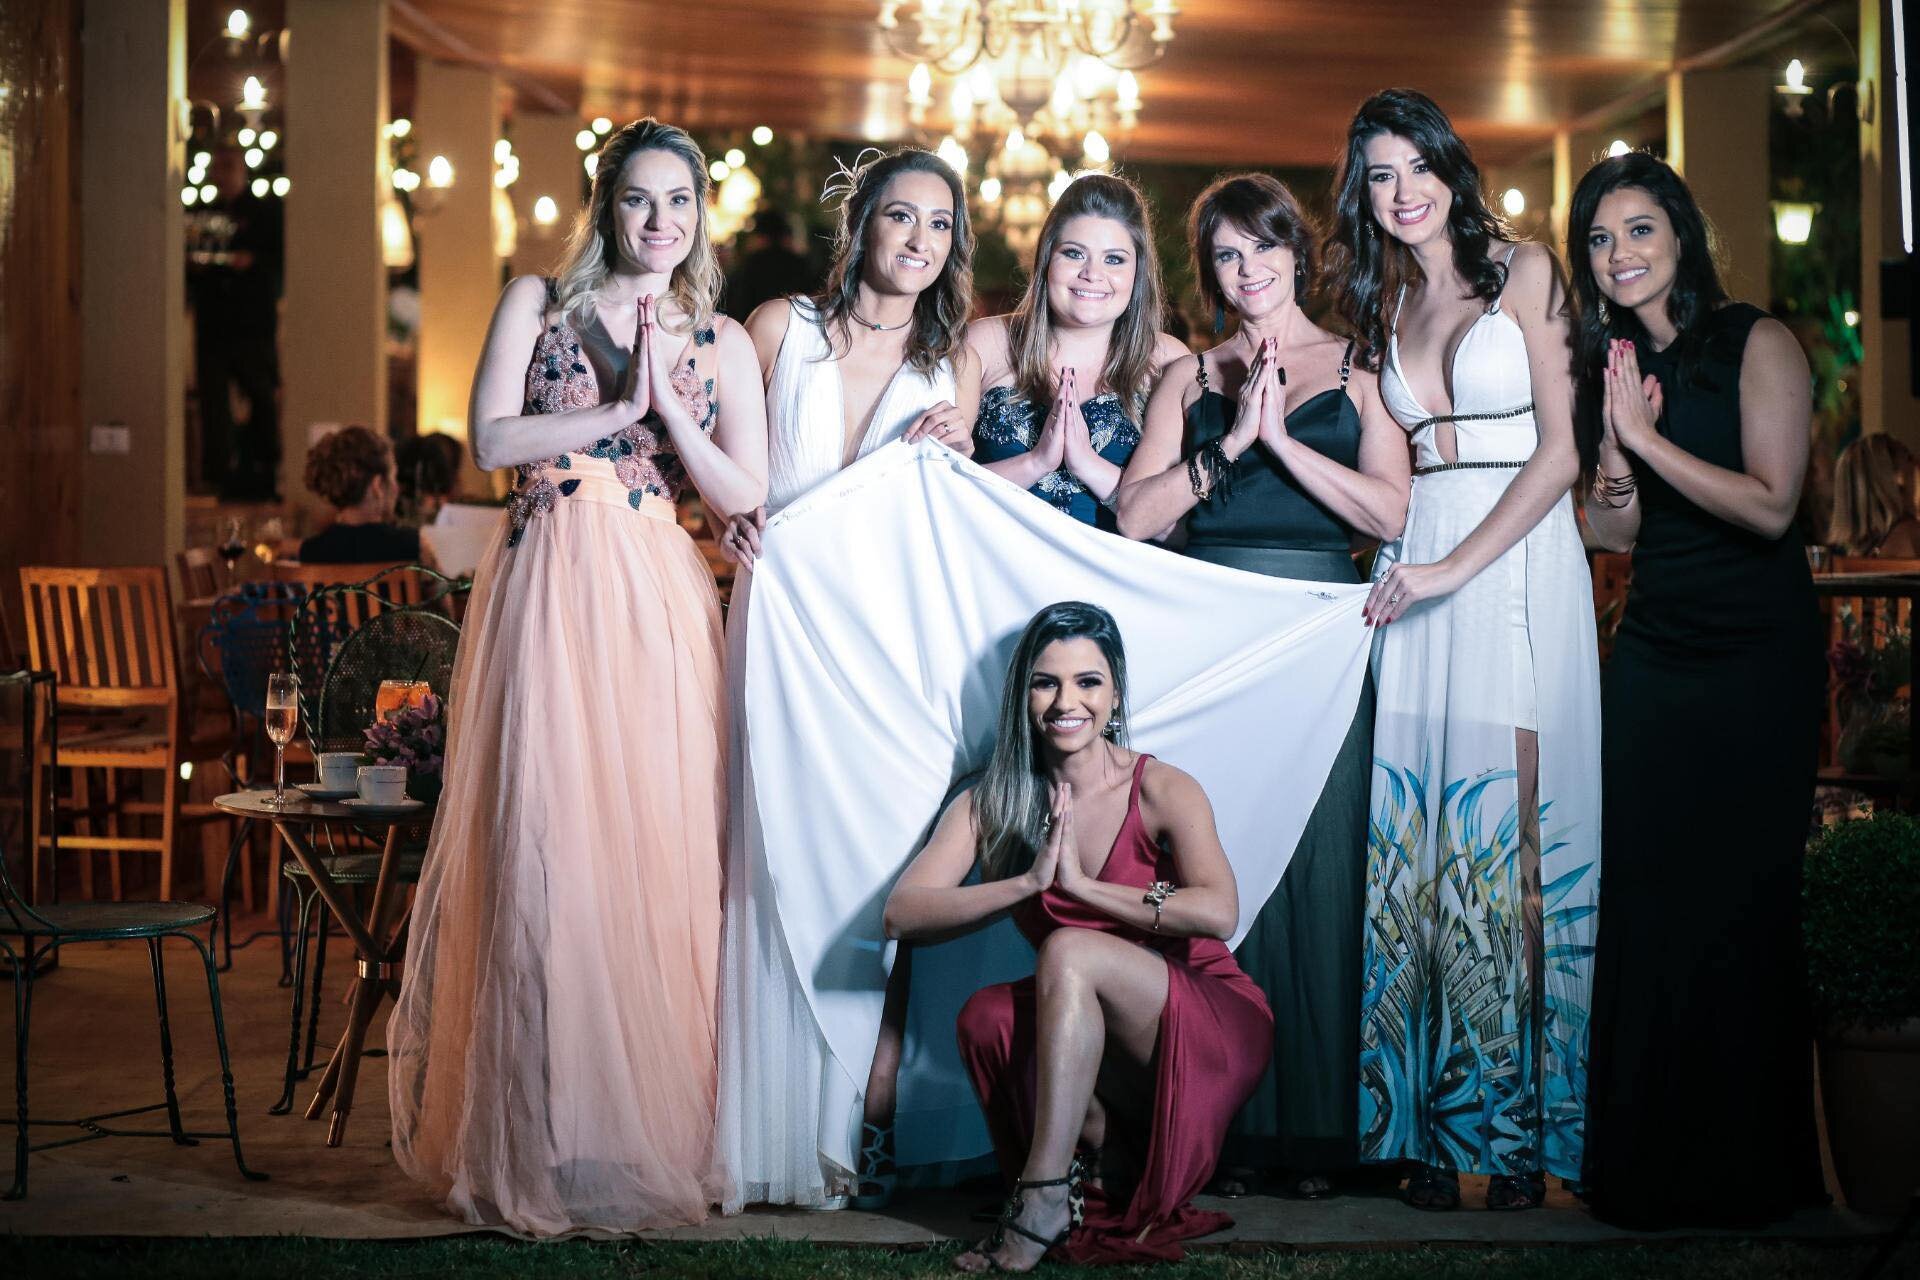 https://images.squarespace-cdn.com/content/v1/5df9ea41799ea72fb8fb3ba9/1601538148893-SYA7CTNEYUTATS9RHETF/Brazilian+girls+at+a+Brazilian+Italian+wedding.jpg